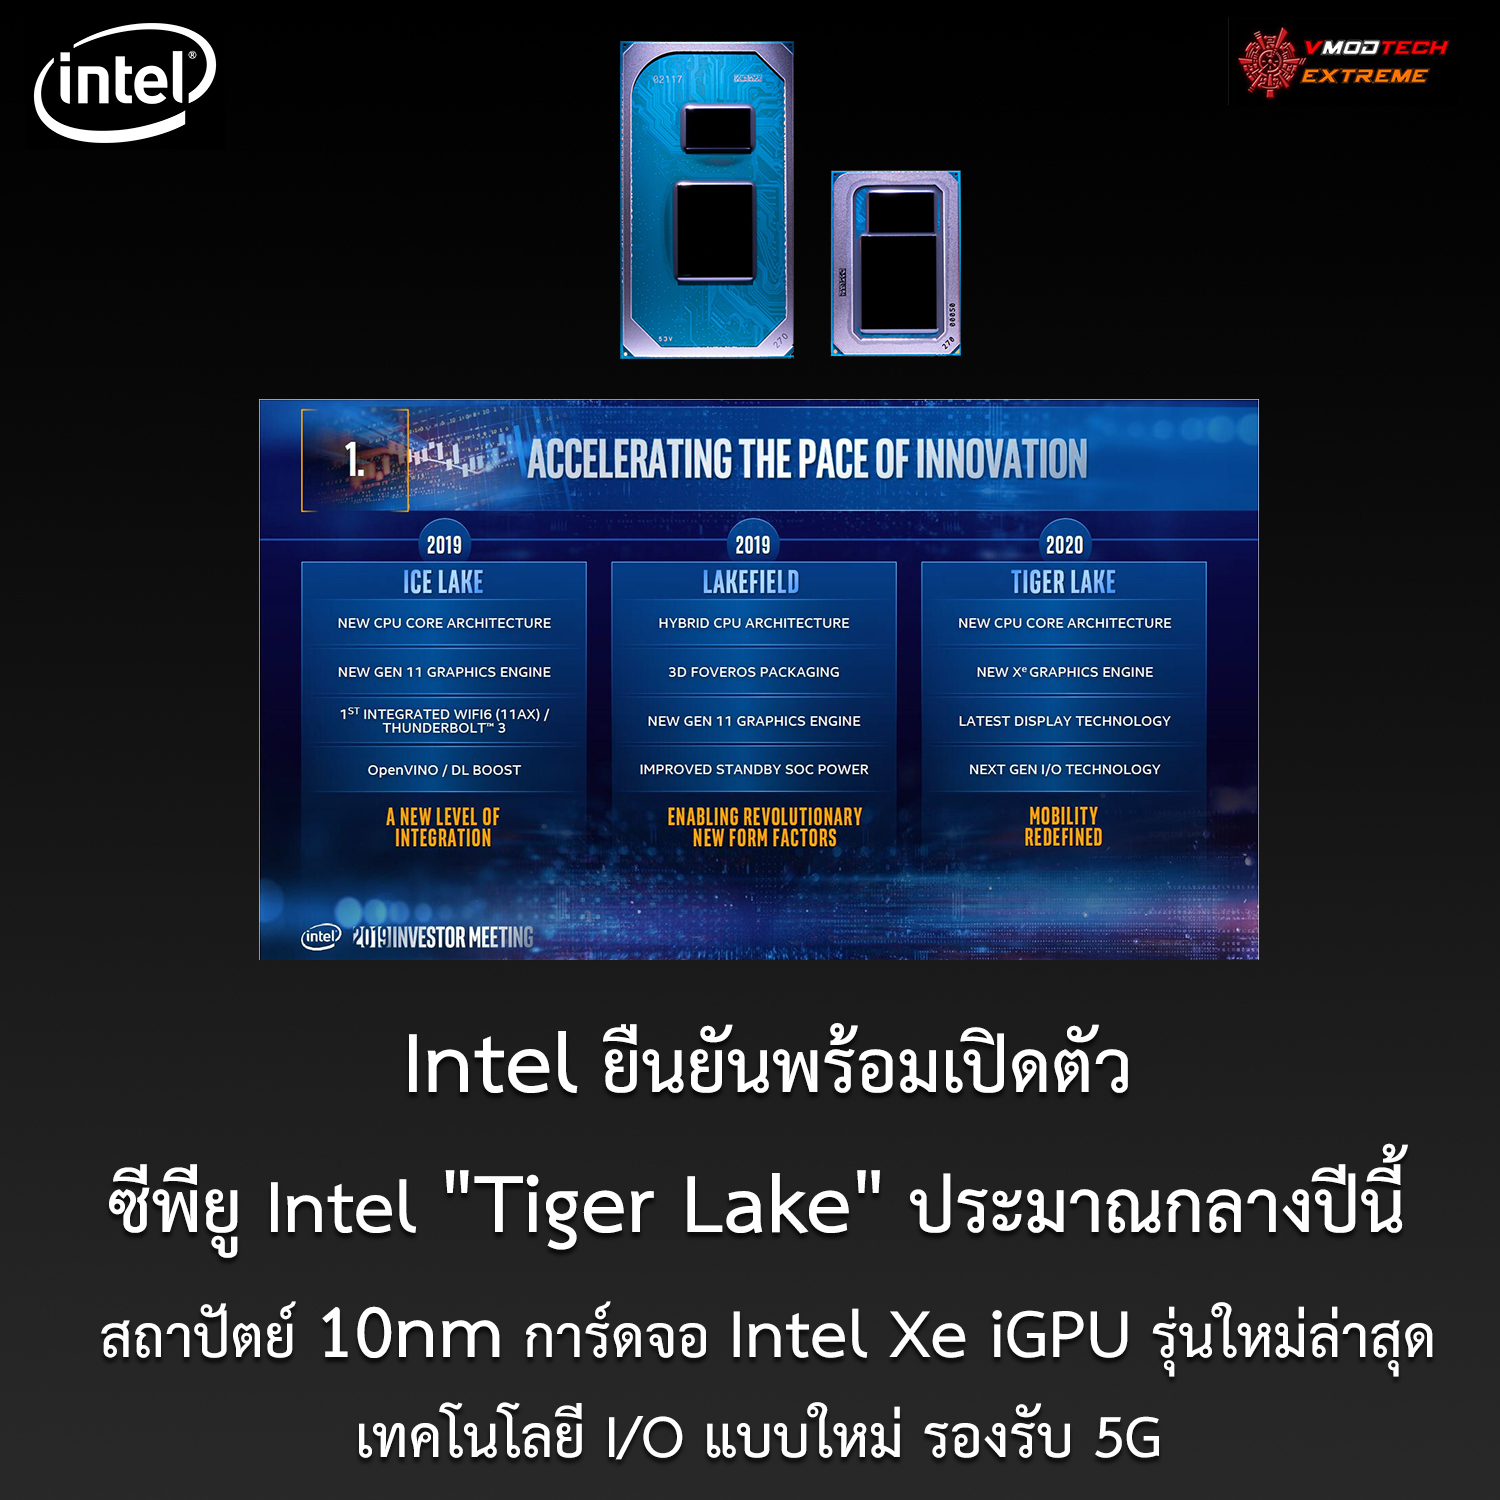 intel tiger lake mid 2020 Intel ยืนยันพร้อมเปิดตัวซีพียู Intel Tiger Lake ประมาณกลางปีนี้ 